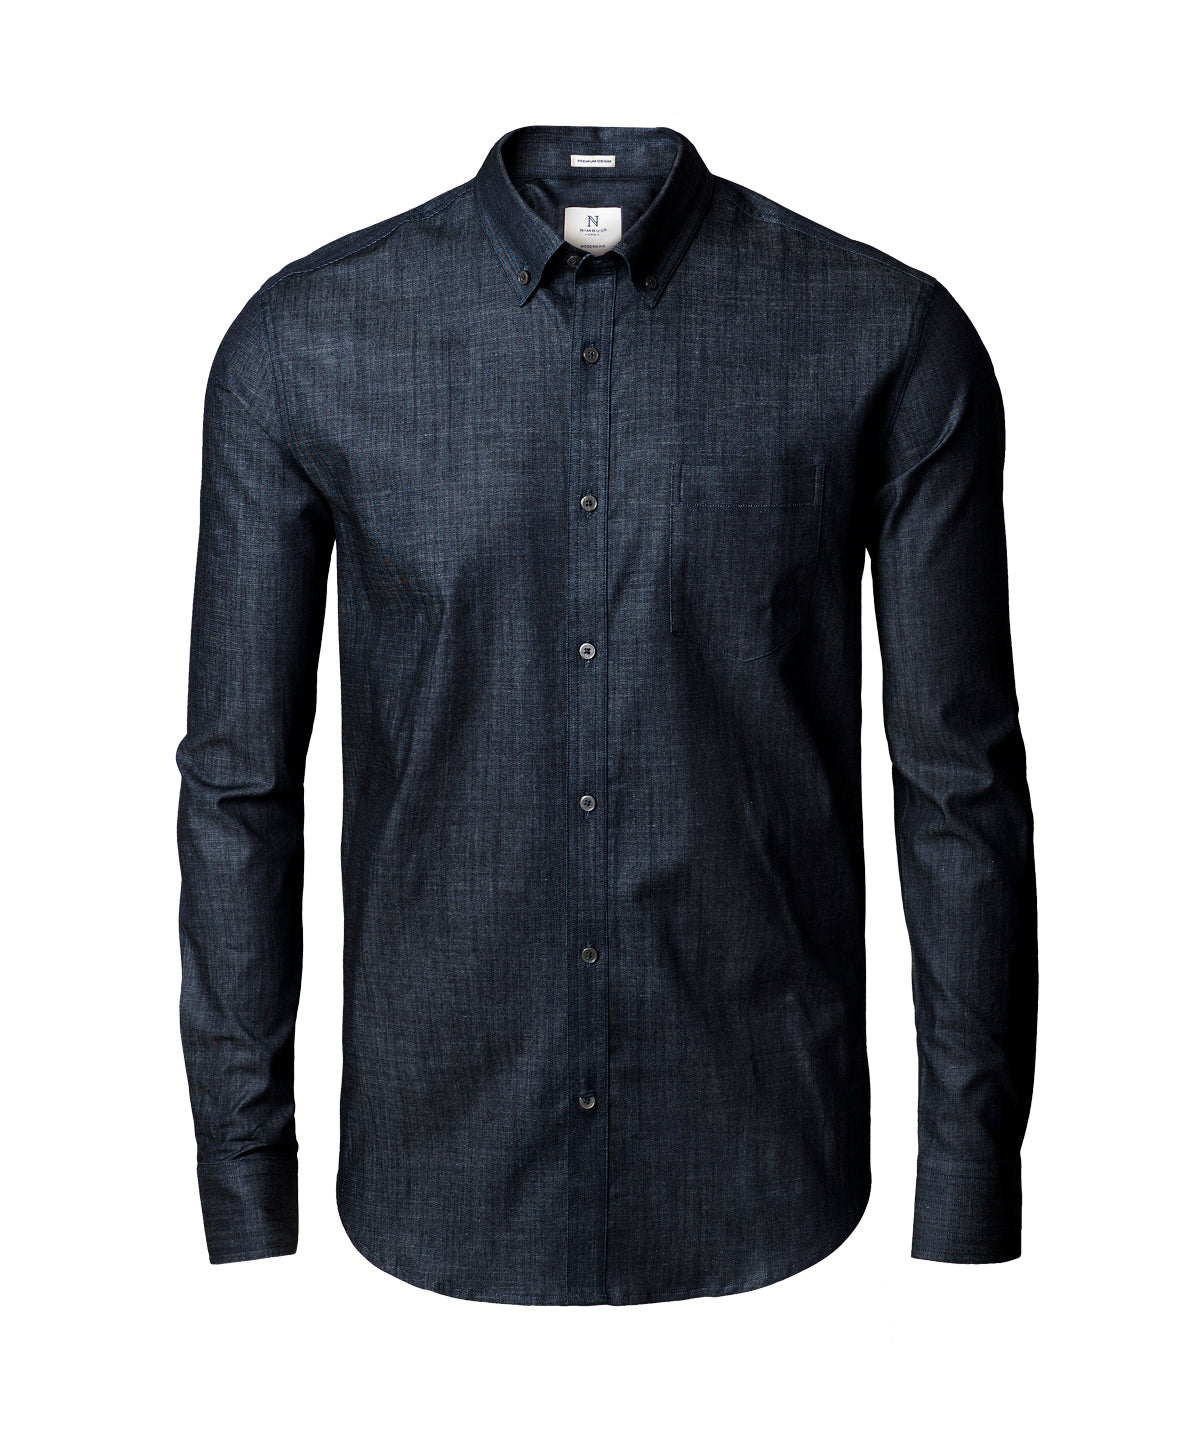 Nimbus Torrance modern fit – raw and stylish denim shirt